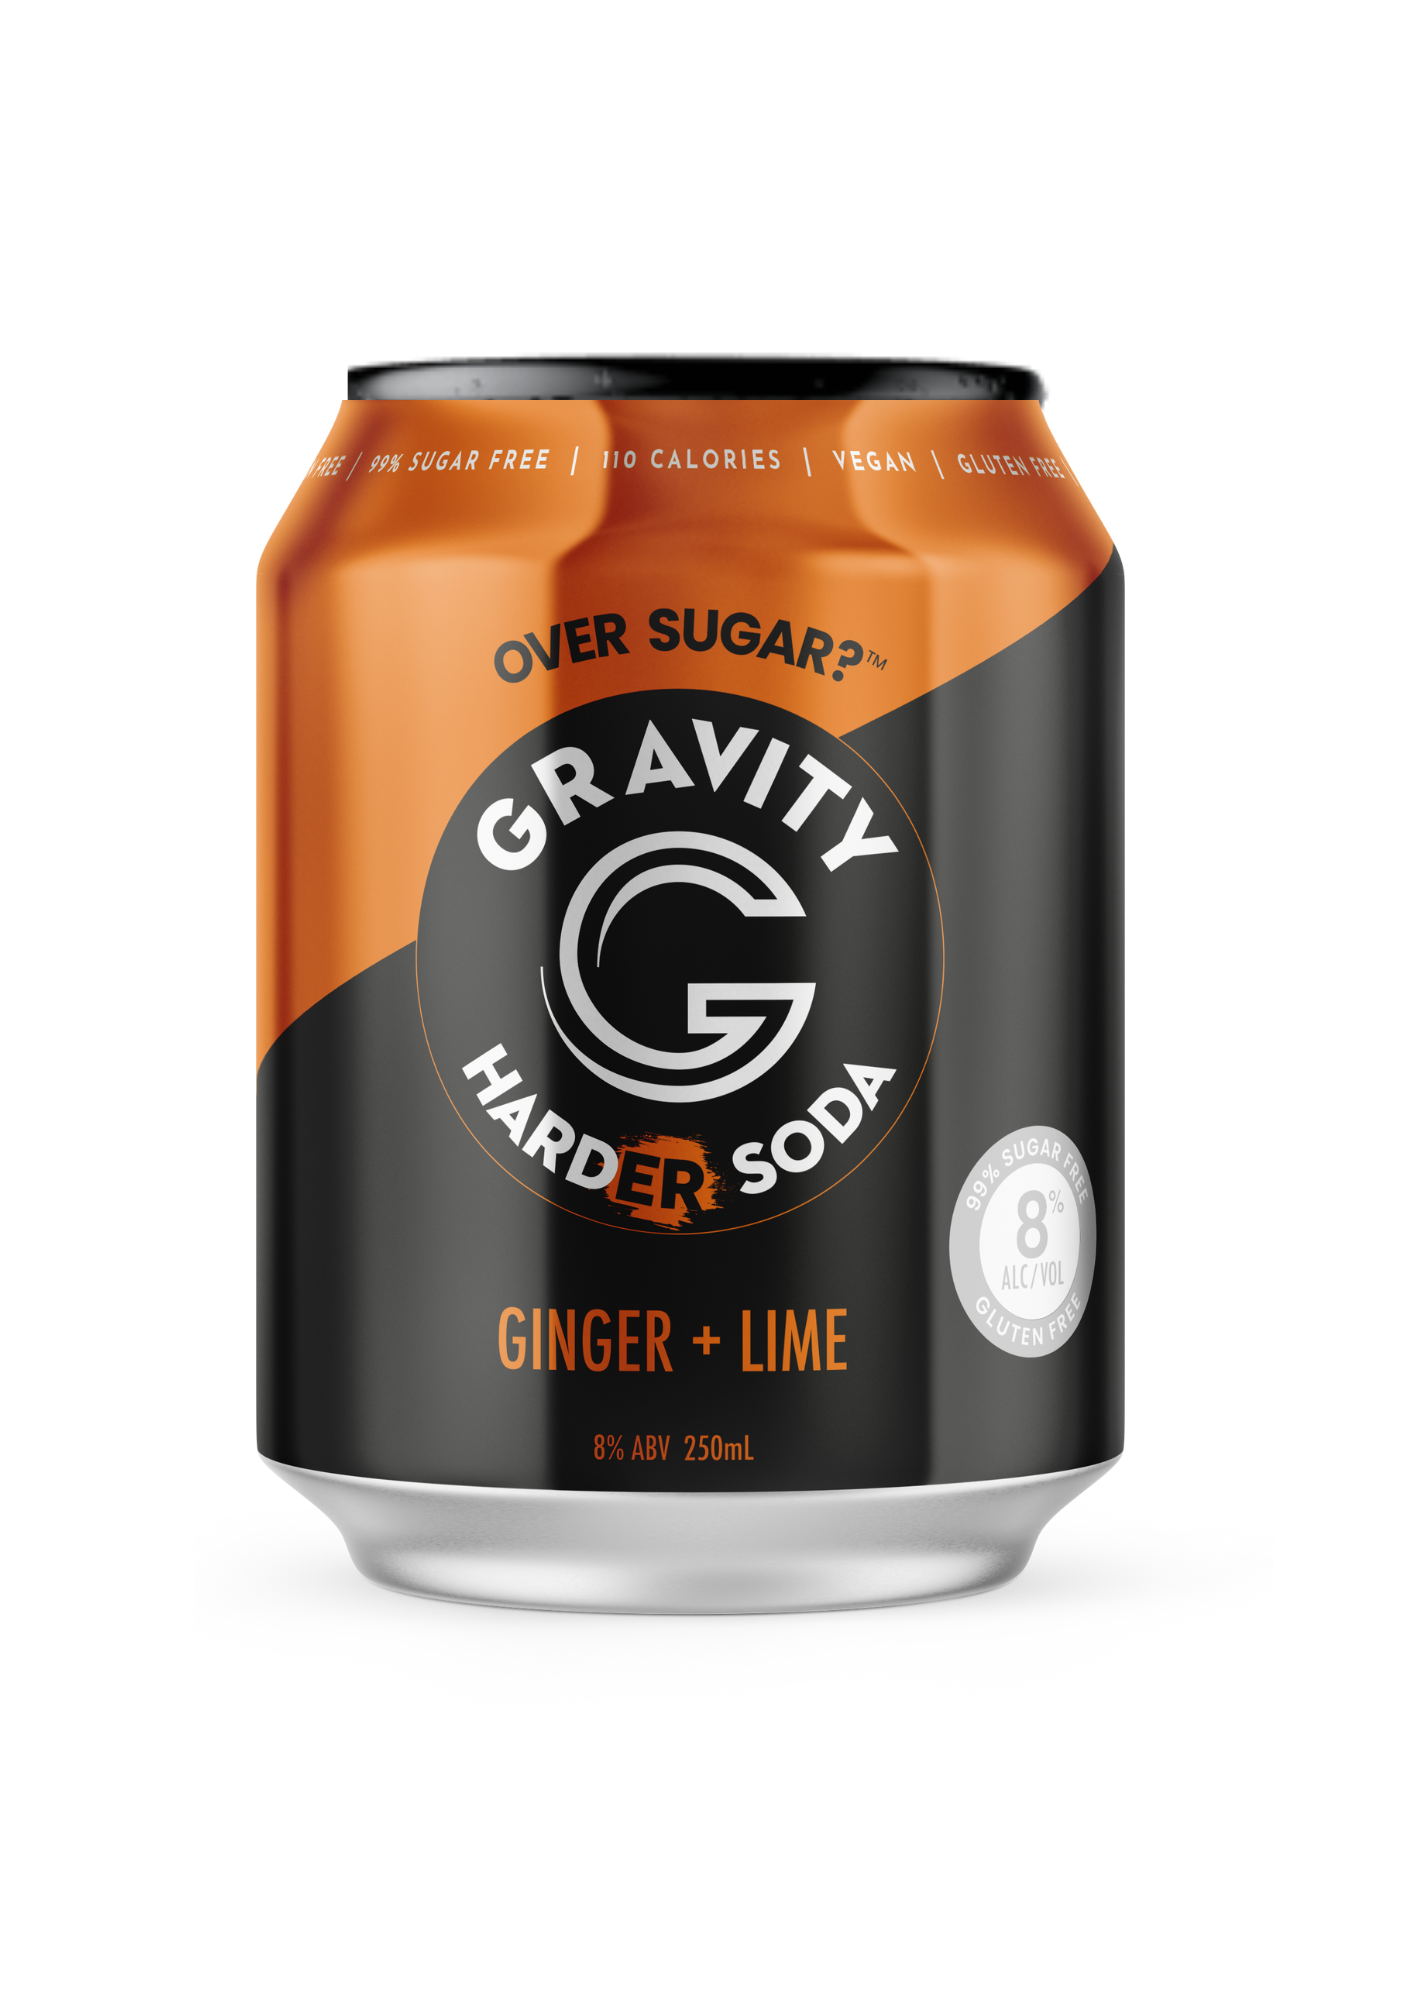 HardER Soda | Ginger & Lime (8%)